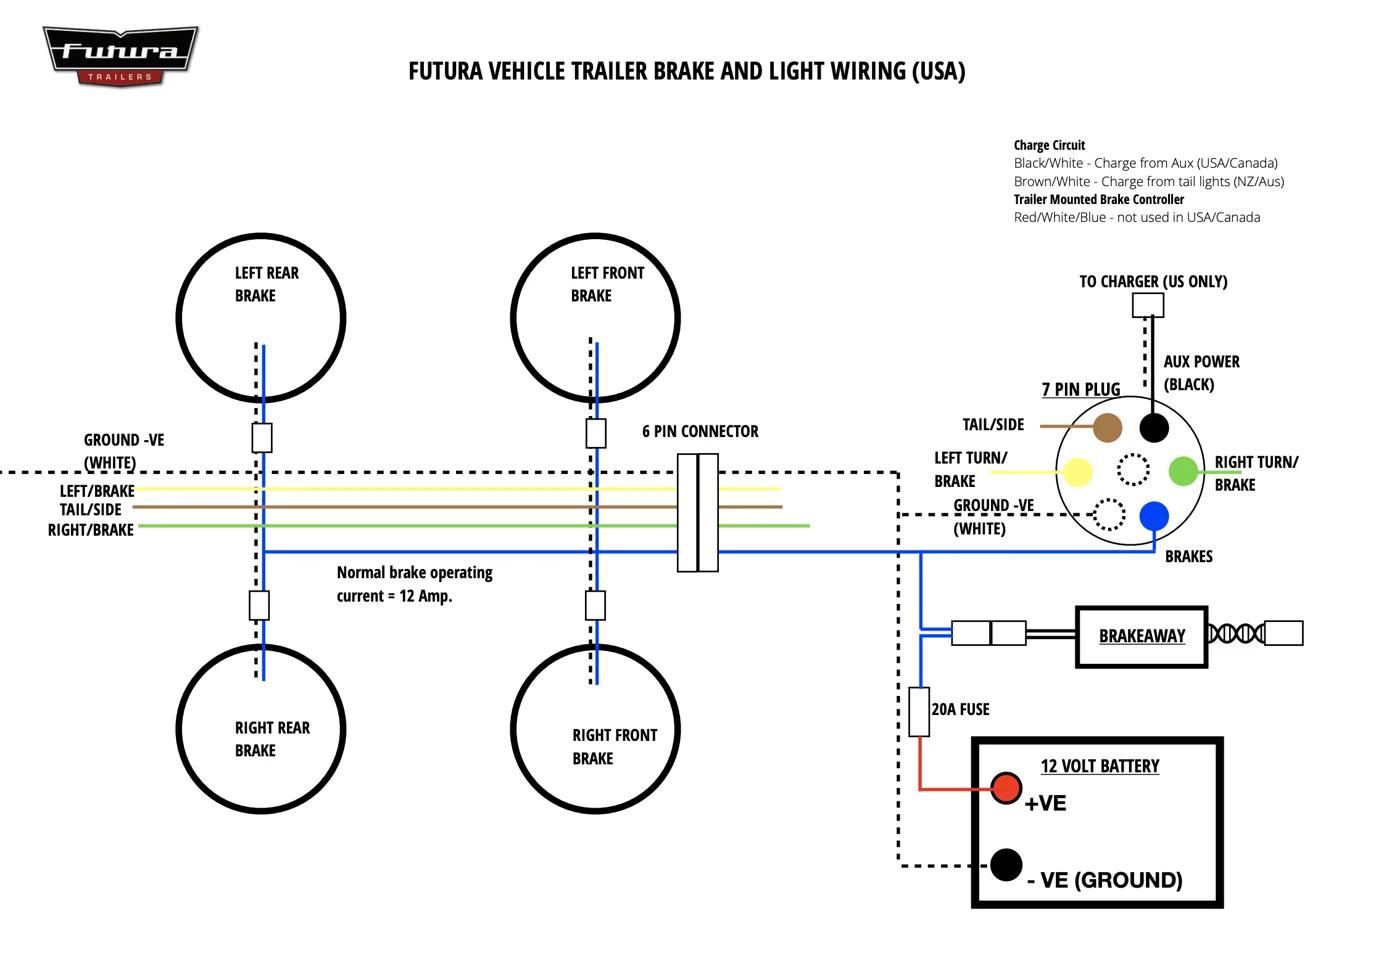 Tech Info Futura - Light and Brake Wiring Diagram - Vehicle Trailer